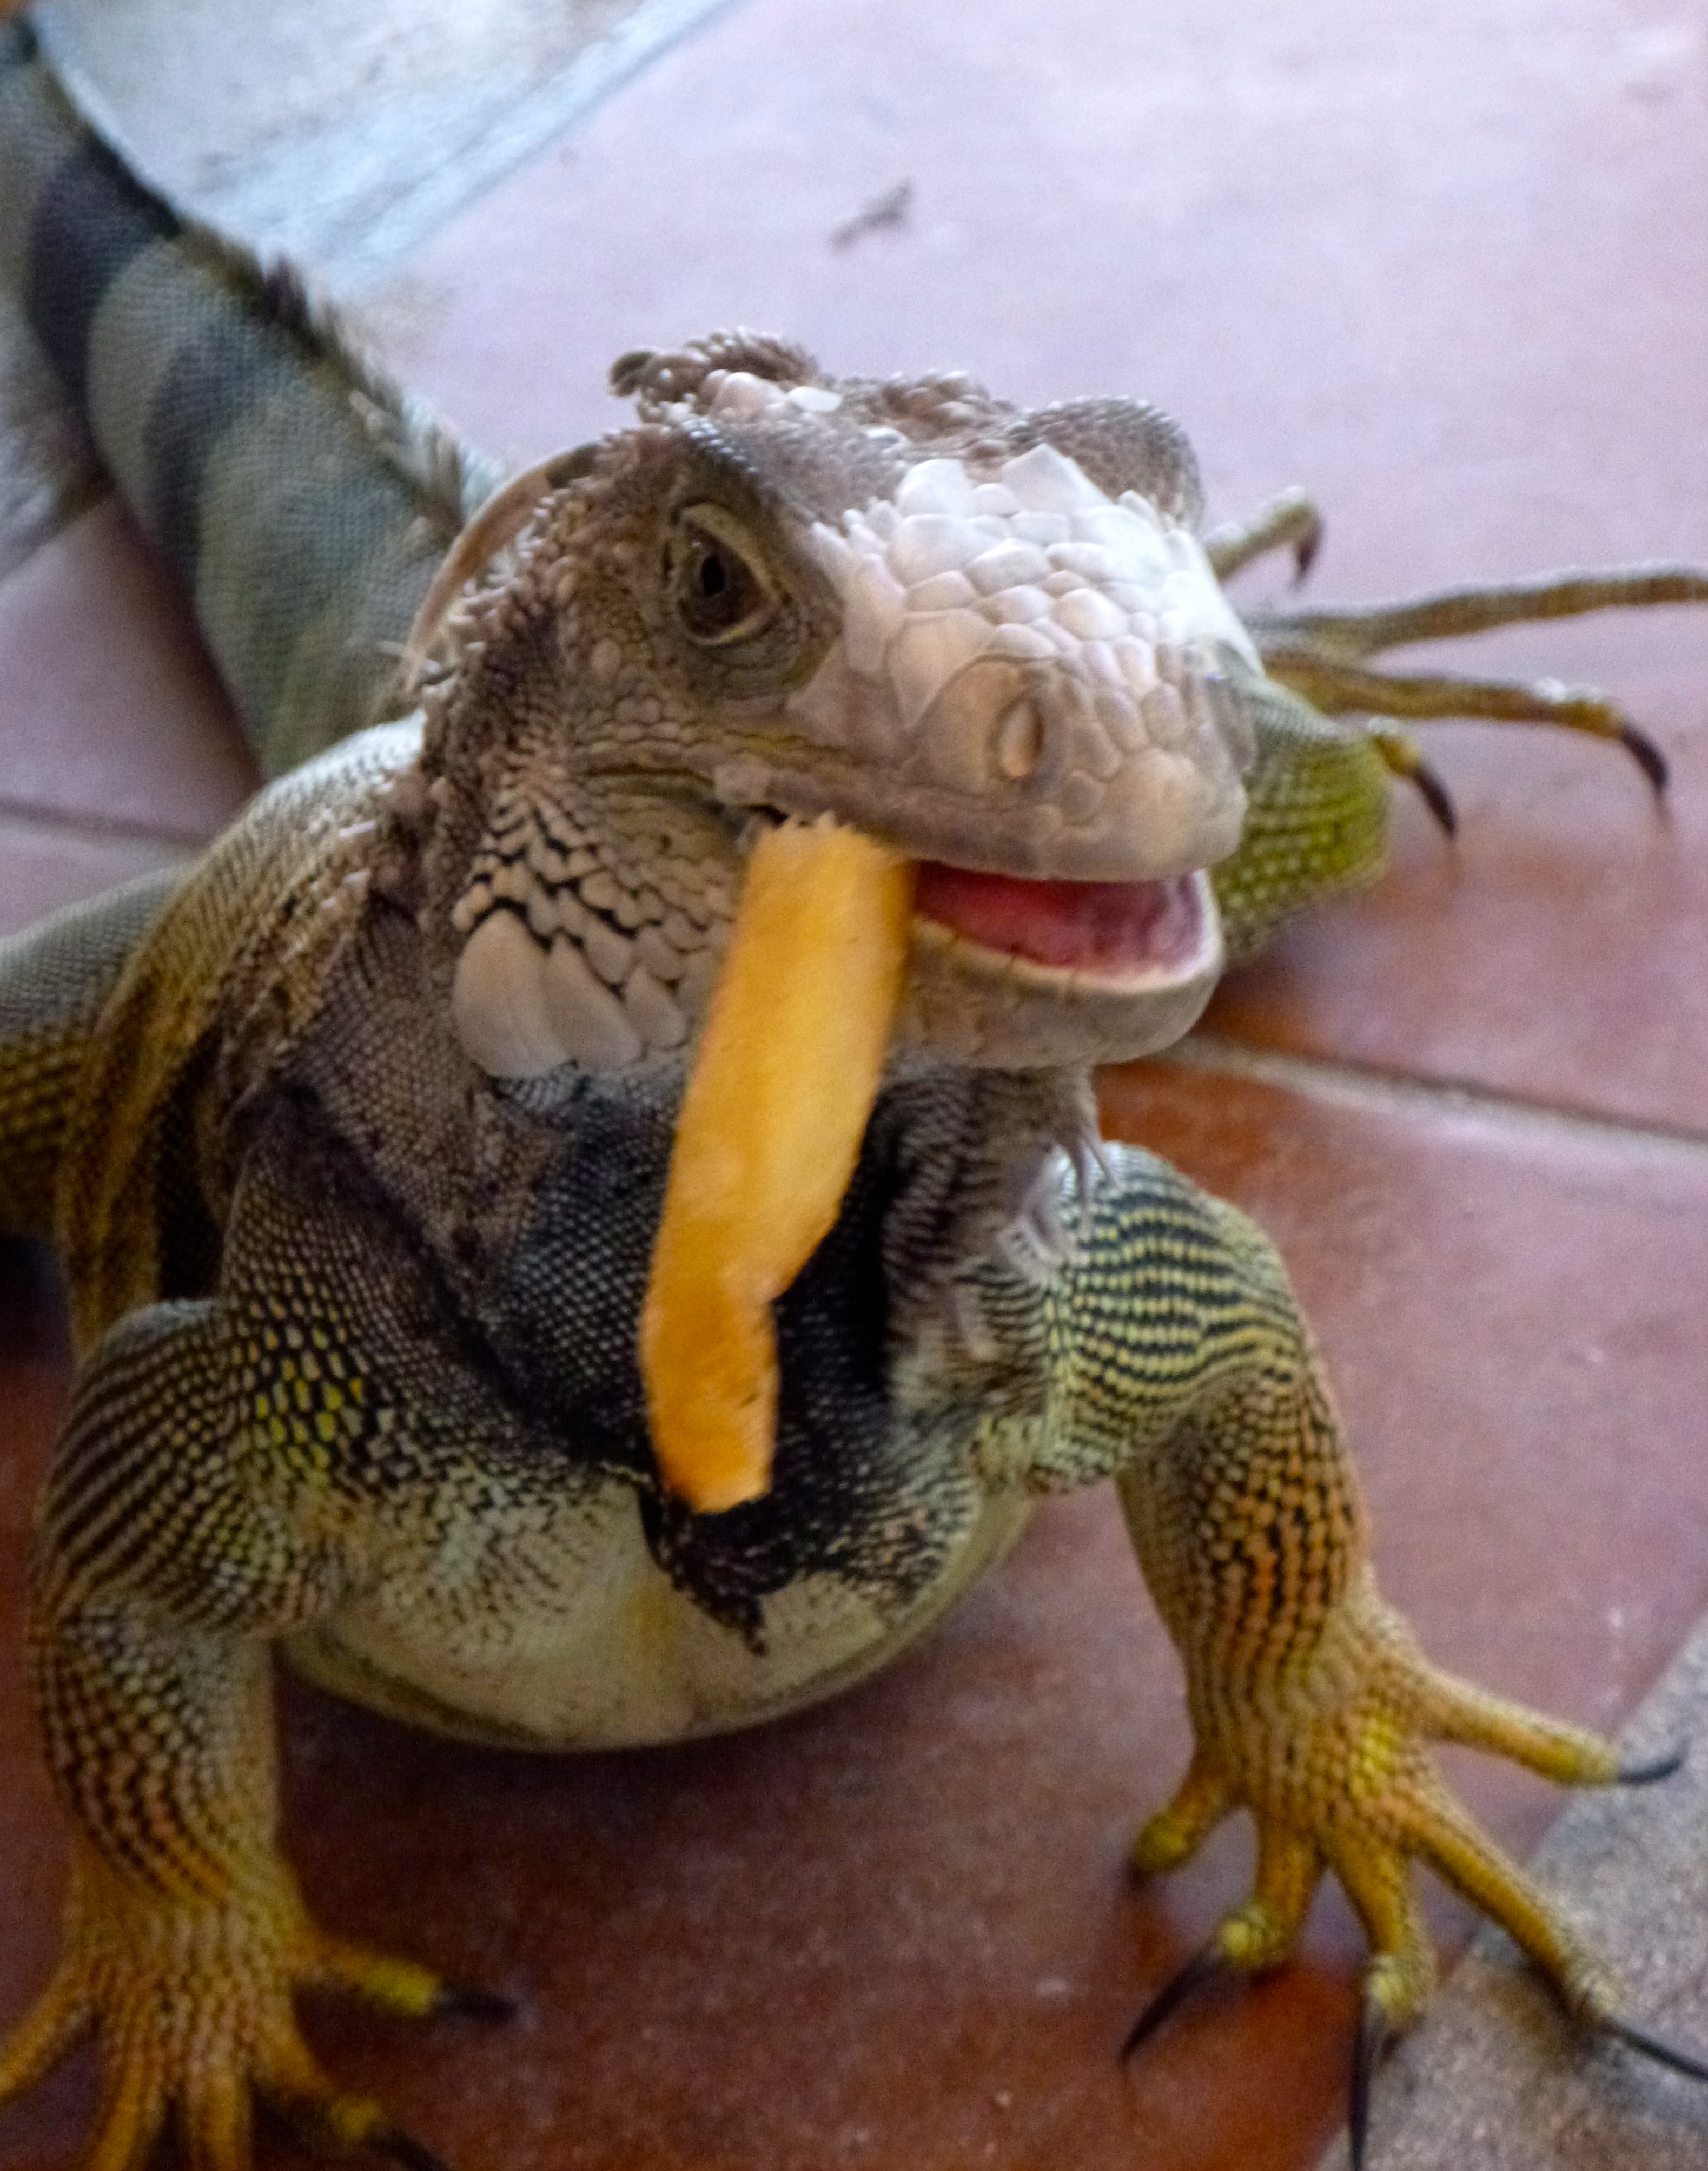 Iguana eating a French fry